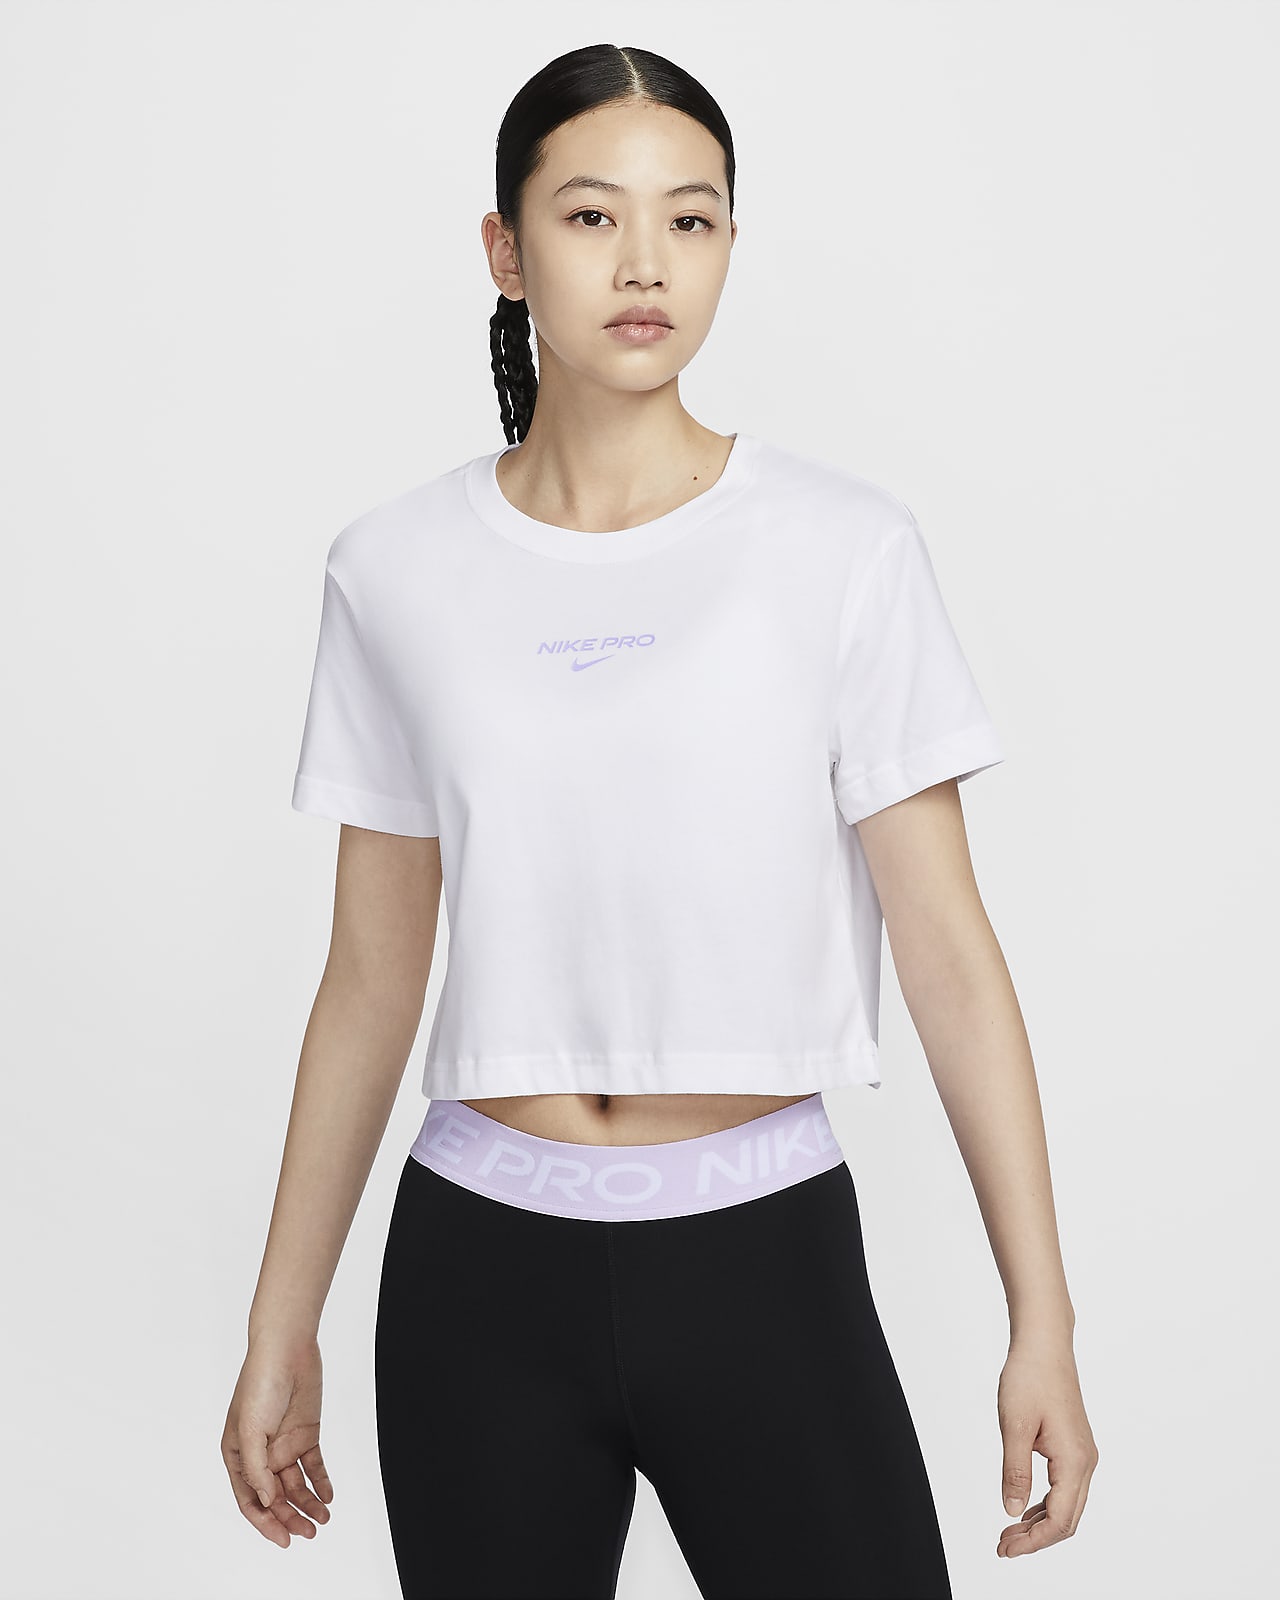 Nike Pro Women's Dri-FIT Short-Sleeve Cropped Tee